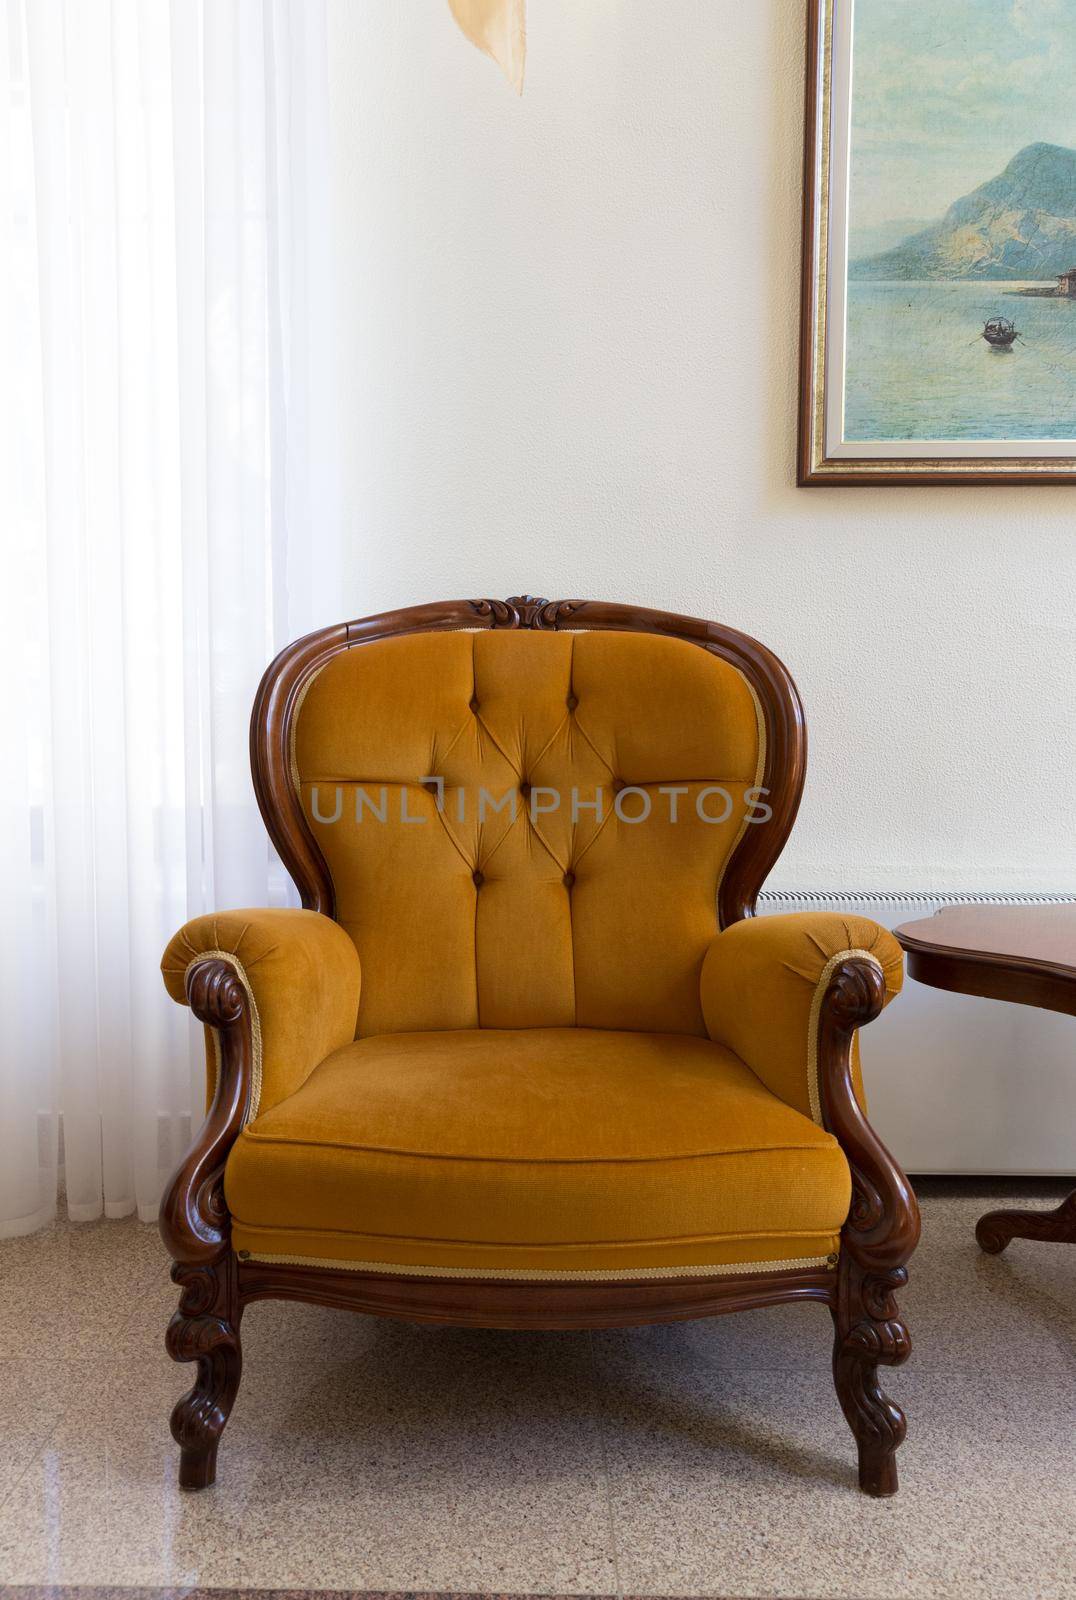 Antique orange armchair isolated on white background